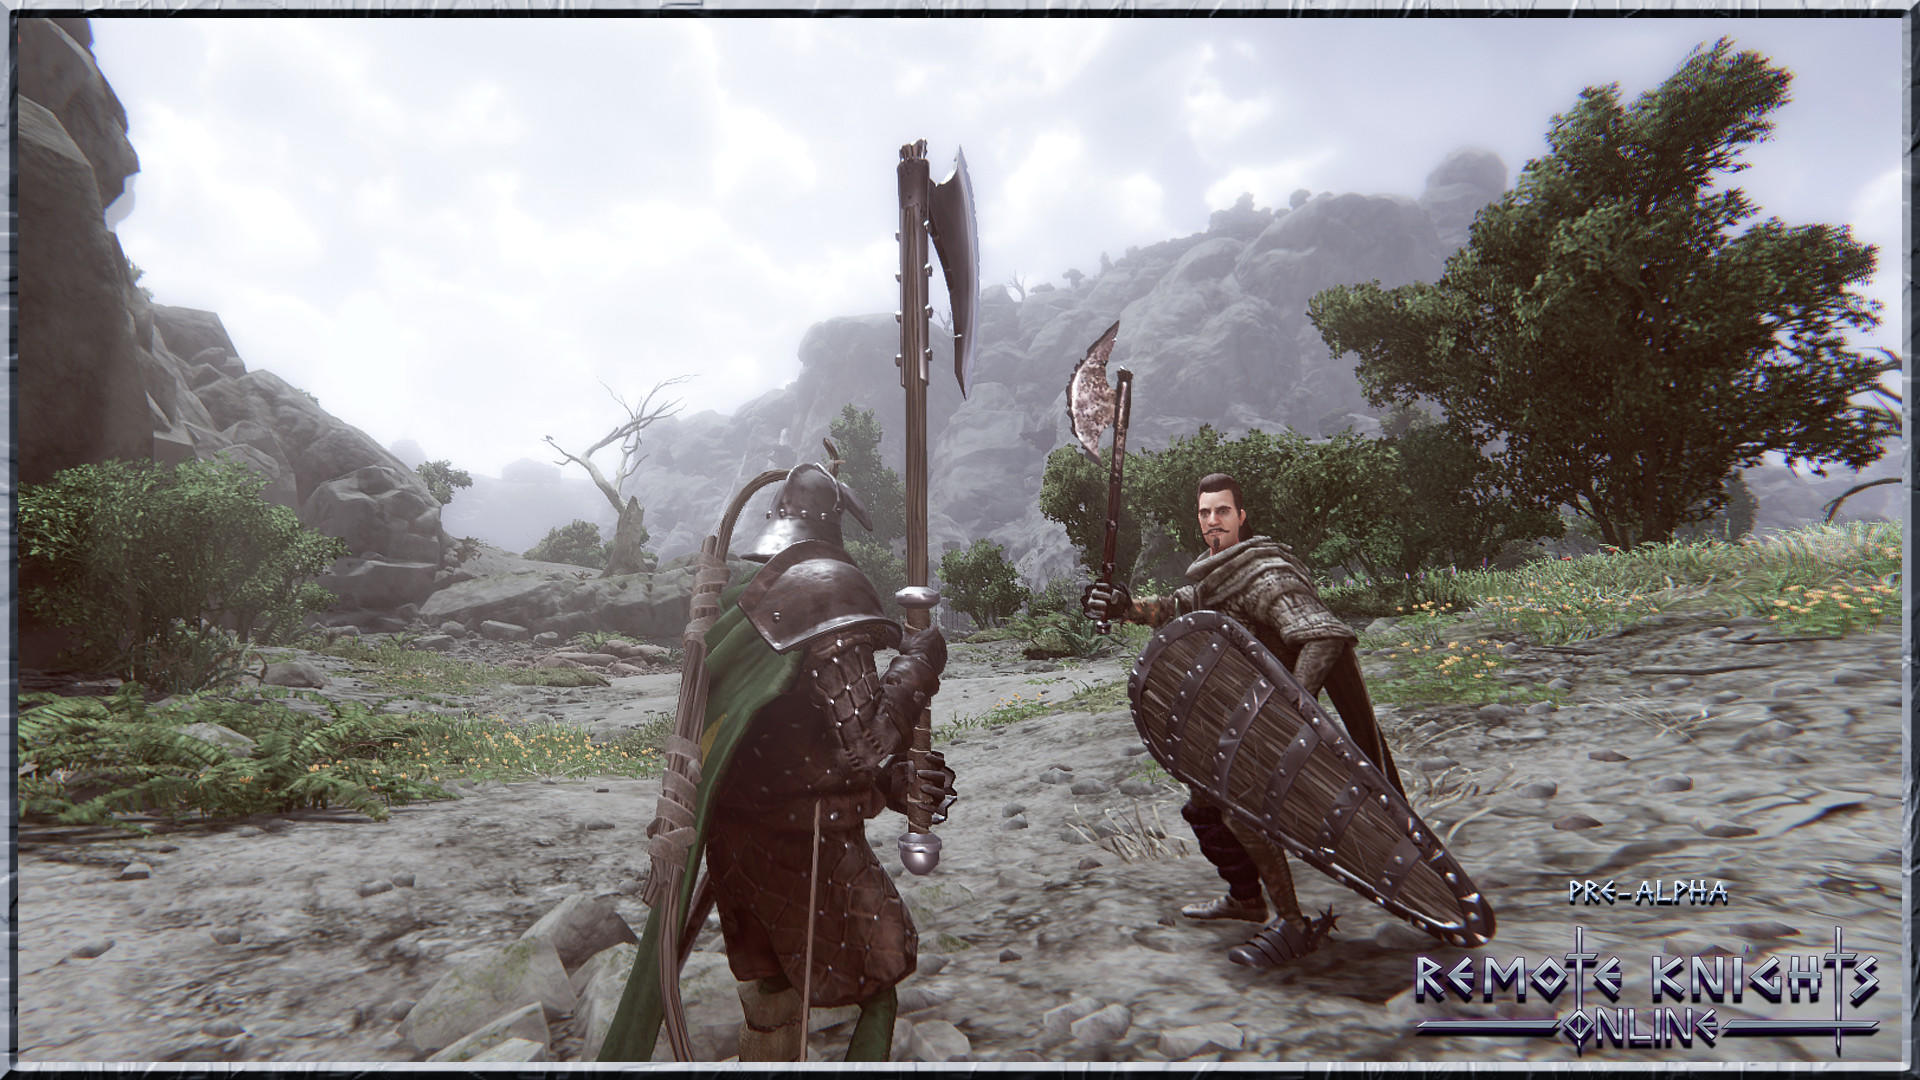 Screenshot 1 of Remote Knights Online 